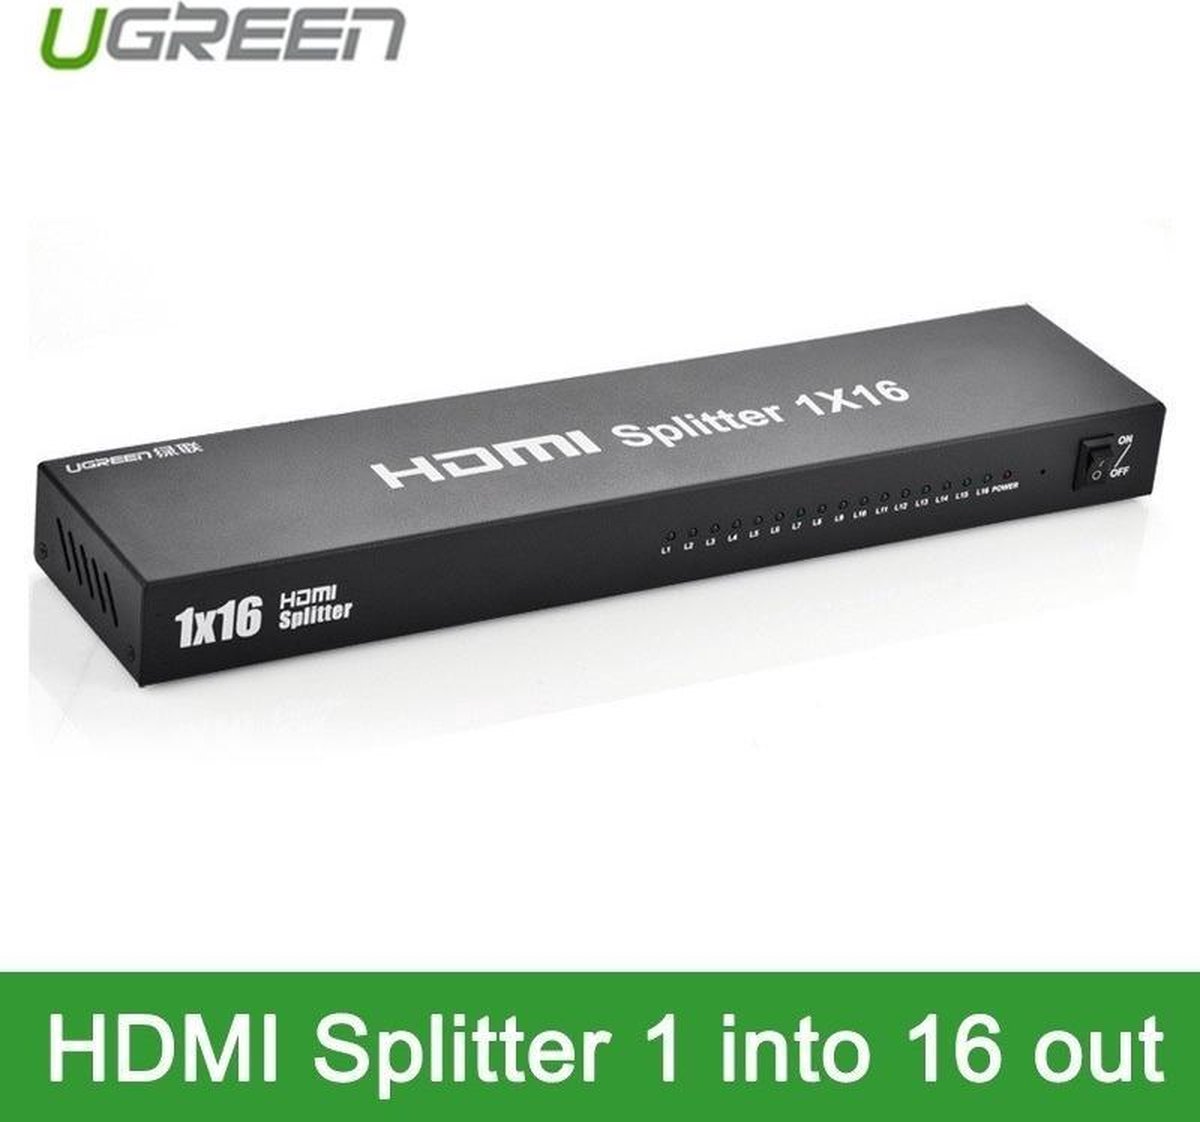 1x16 HDMI Amplifier Splitter